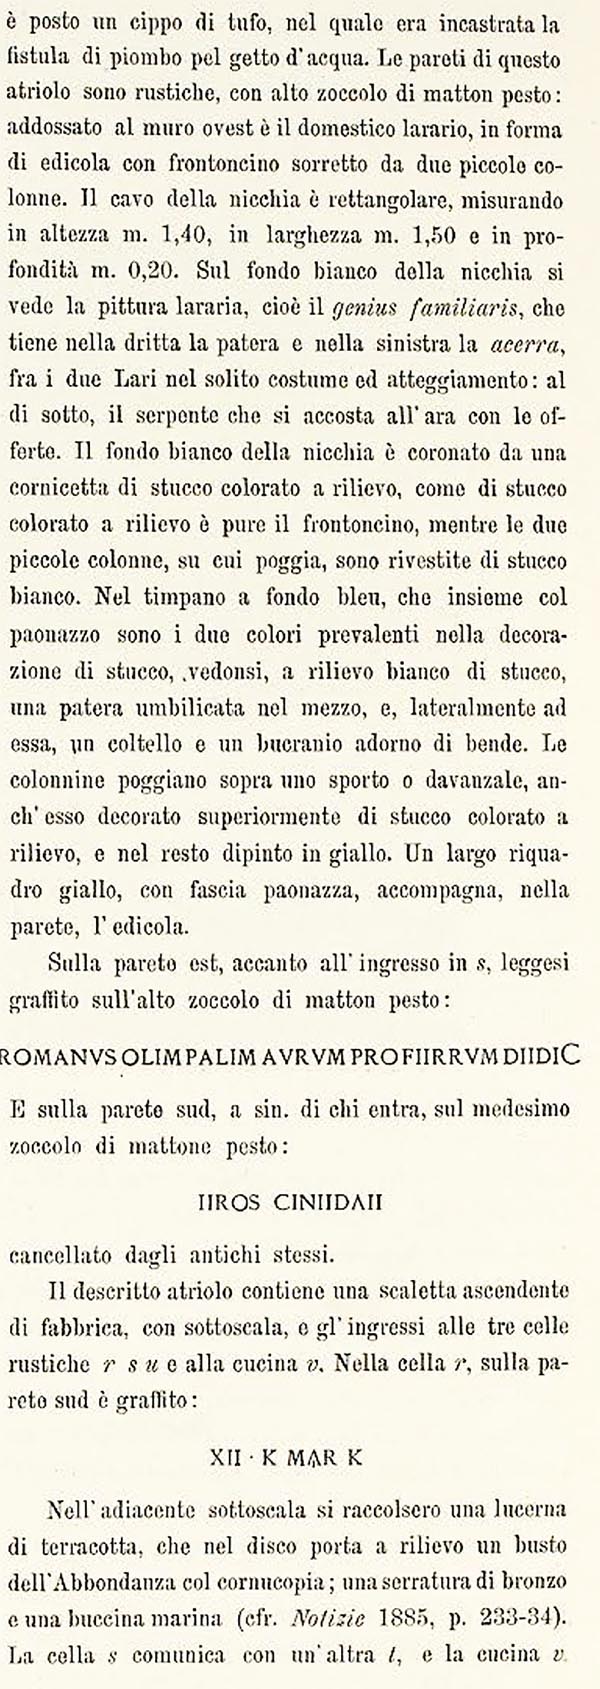 VI.15.1 Pompeii. 1898. Description of rooms by Sogliano.
See Sogliano, A. La Casa dei Vettii in Pompei in Mon. Ant. 1898, p.268.
(Note the room numbers are different from ours on pompeiiinpictures).
